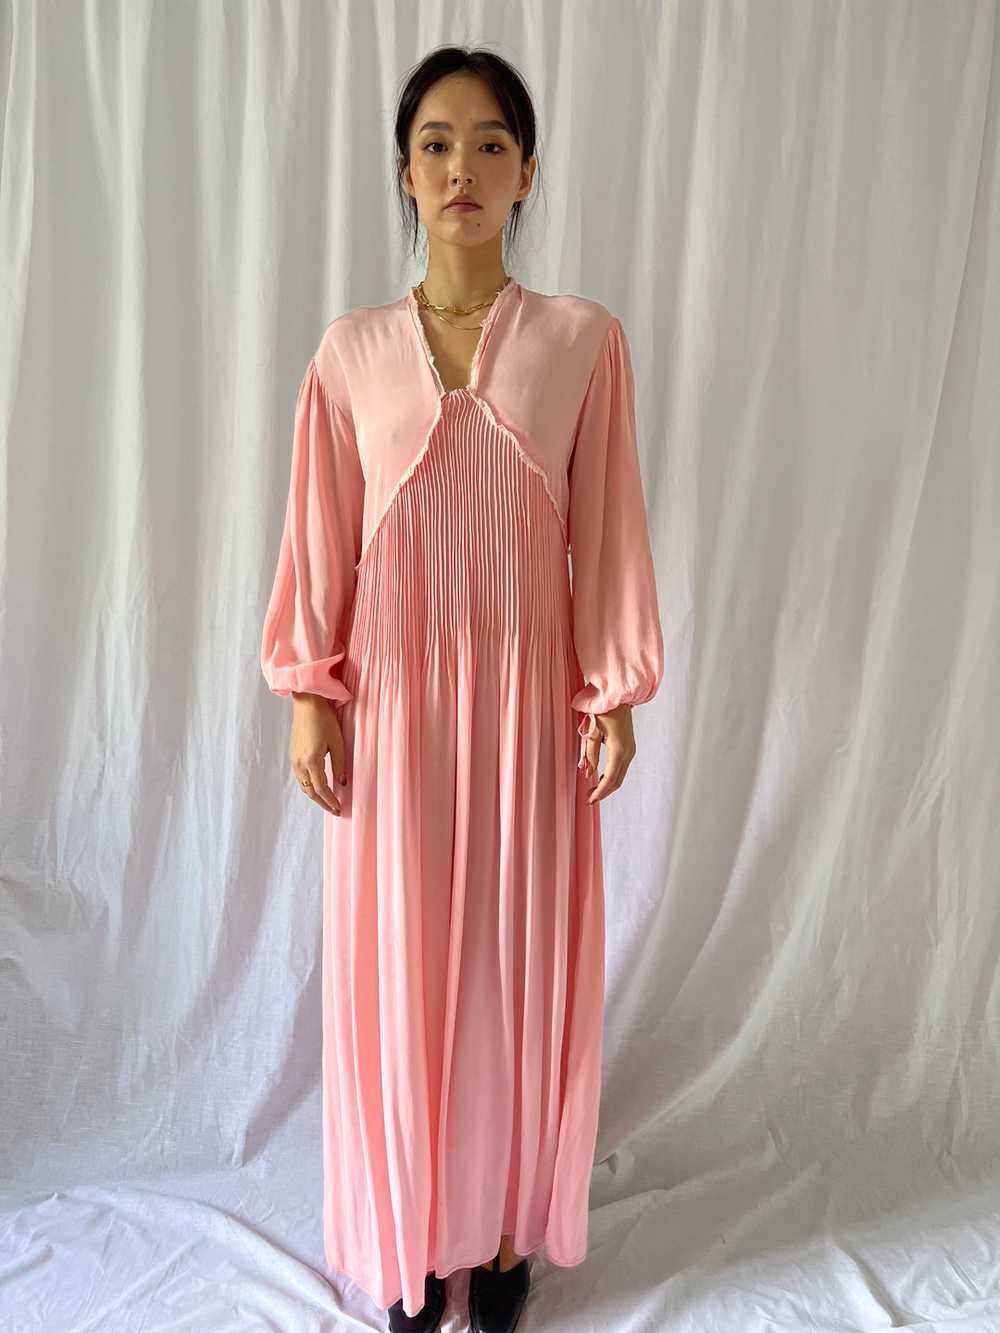 Vintage 30s pink dress long balloon sleeves - image 3